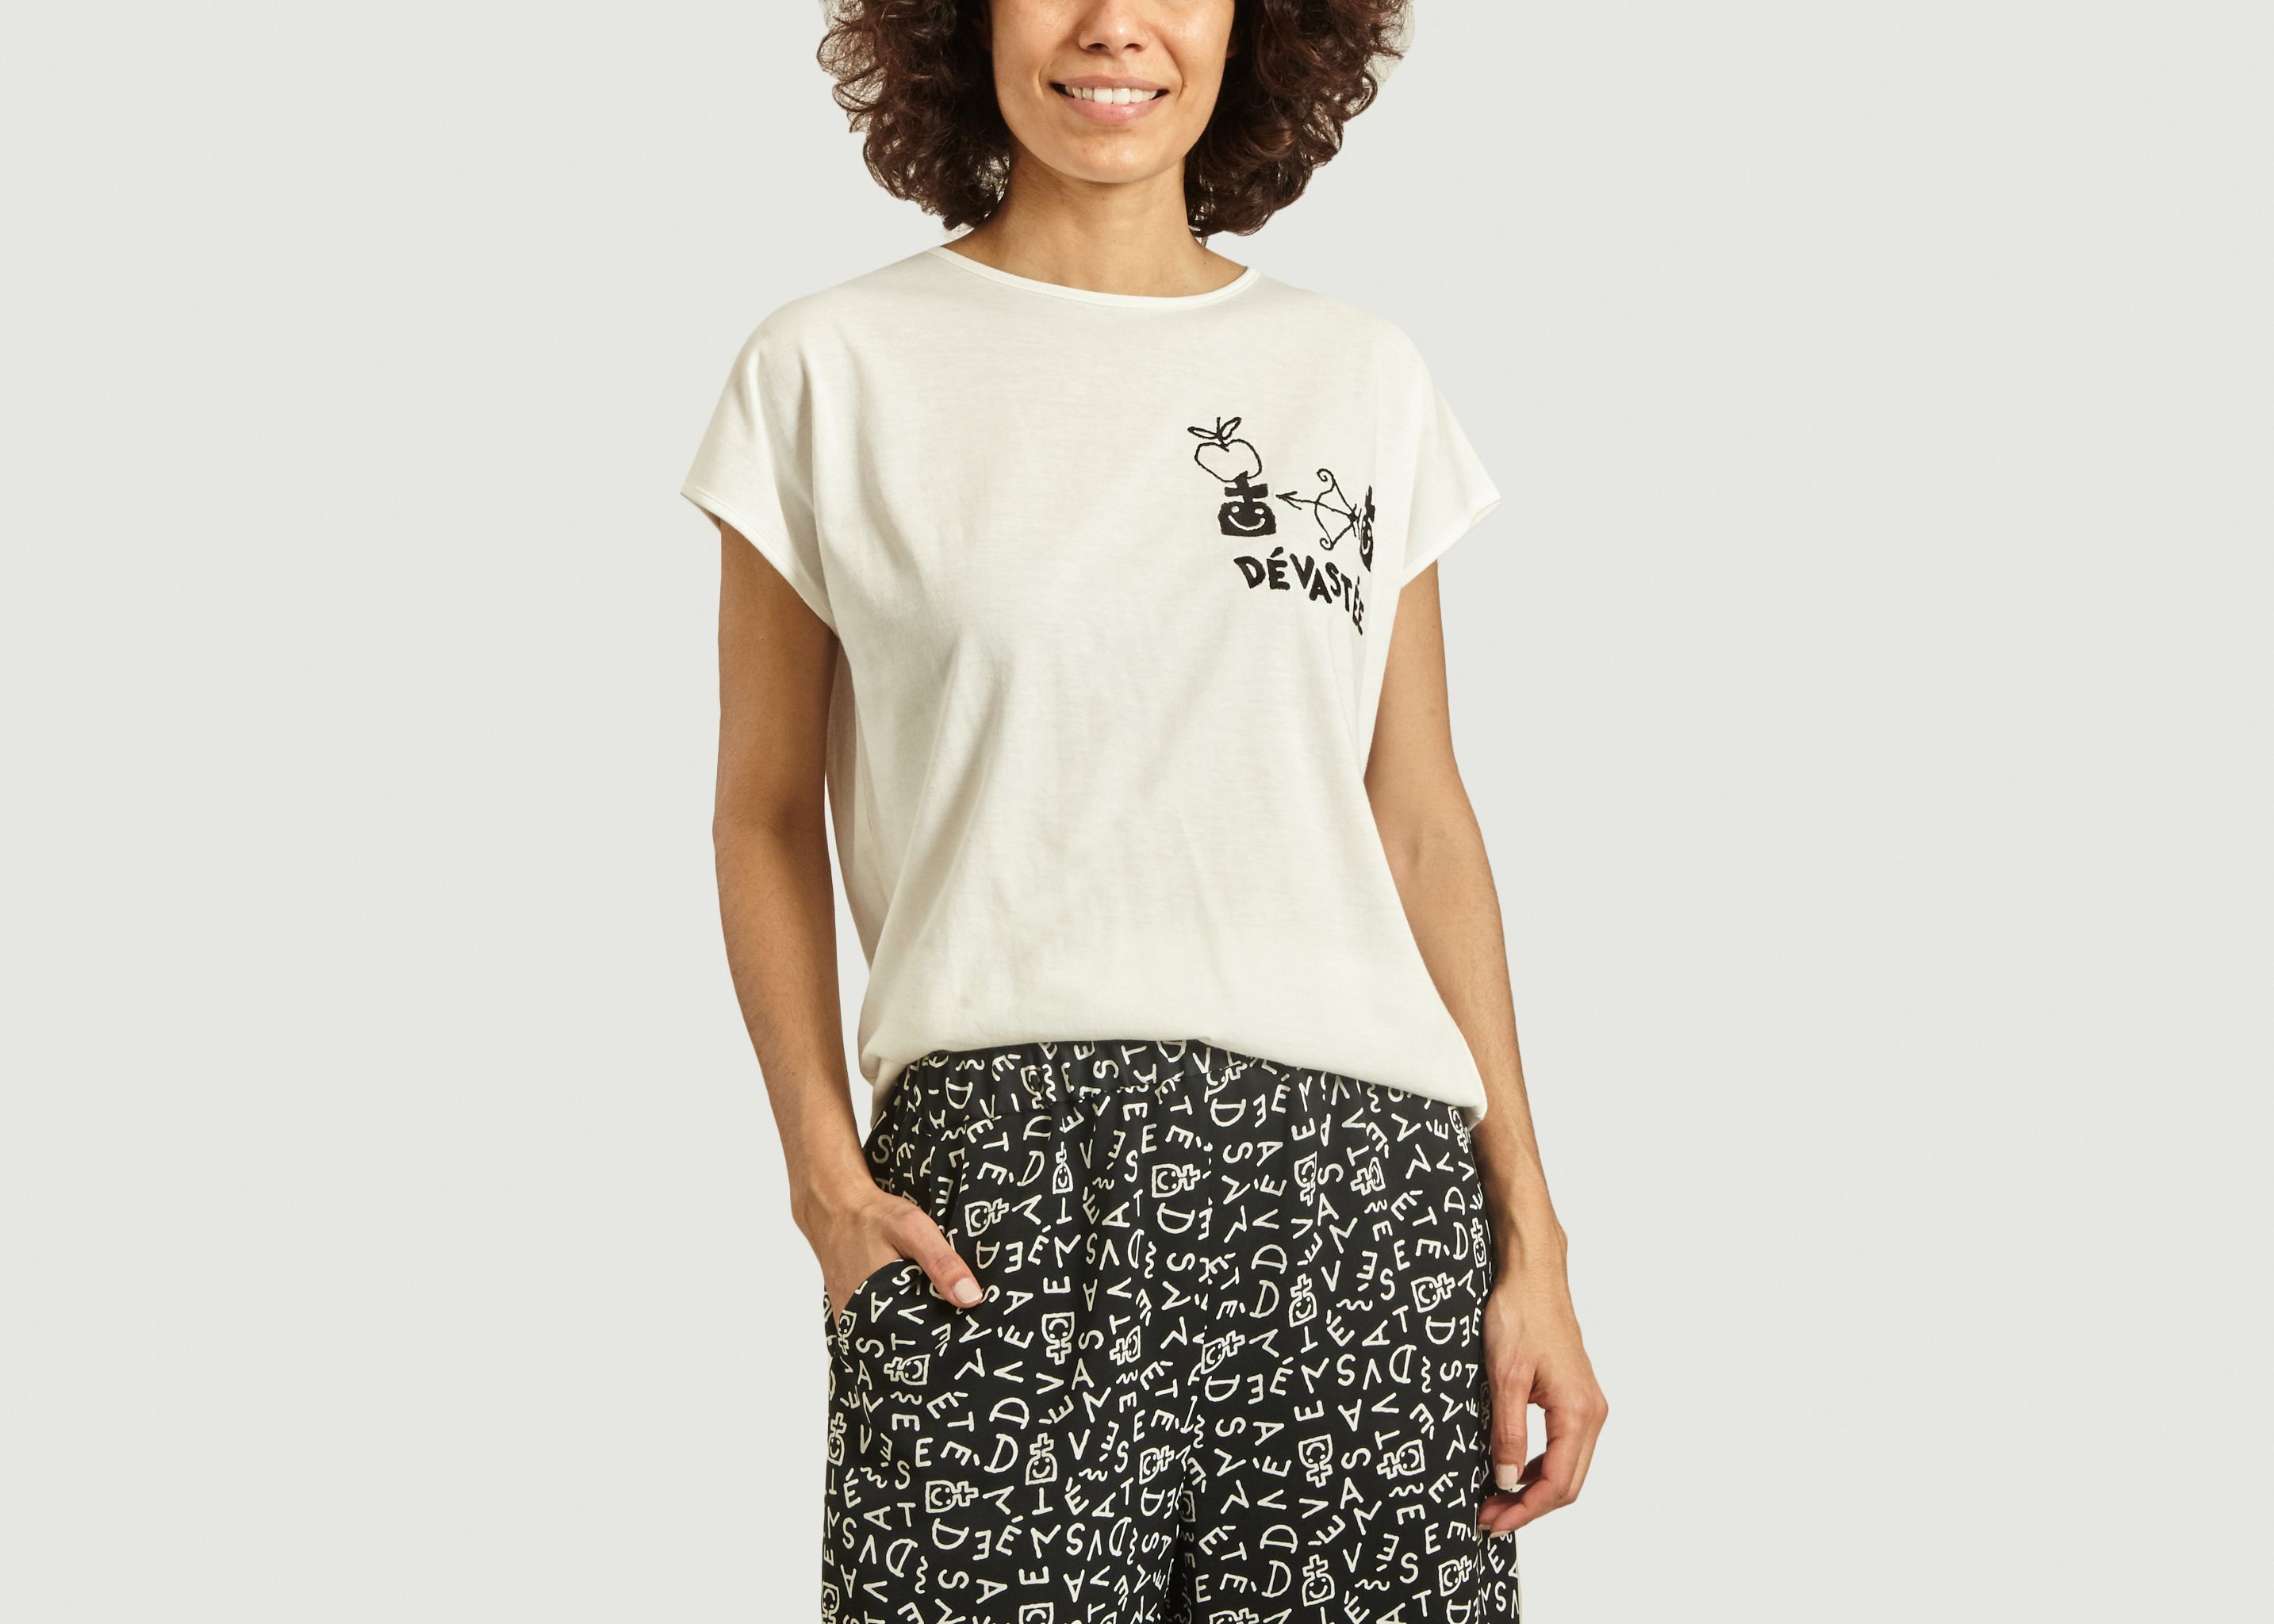 Embroidered soft t-shirt - Dévastée